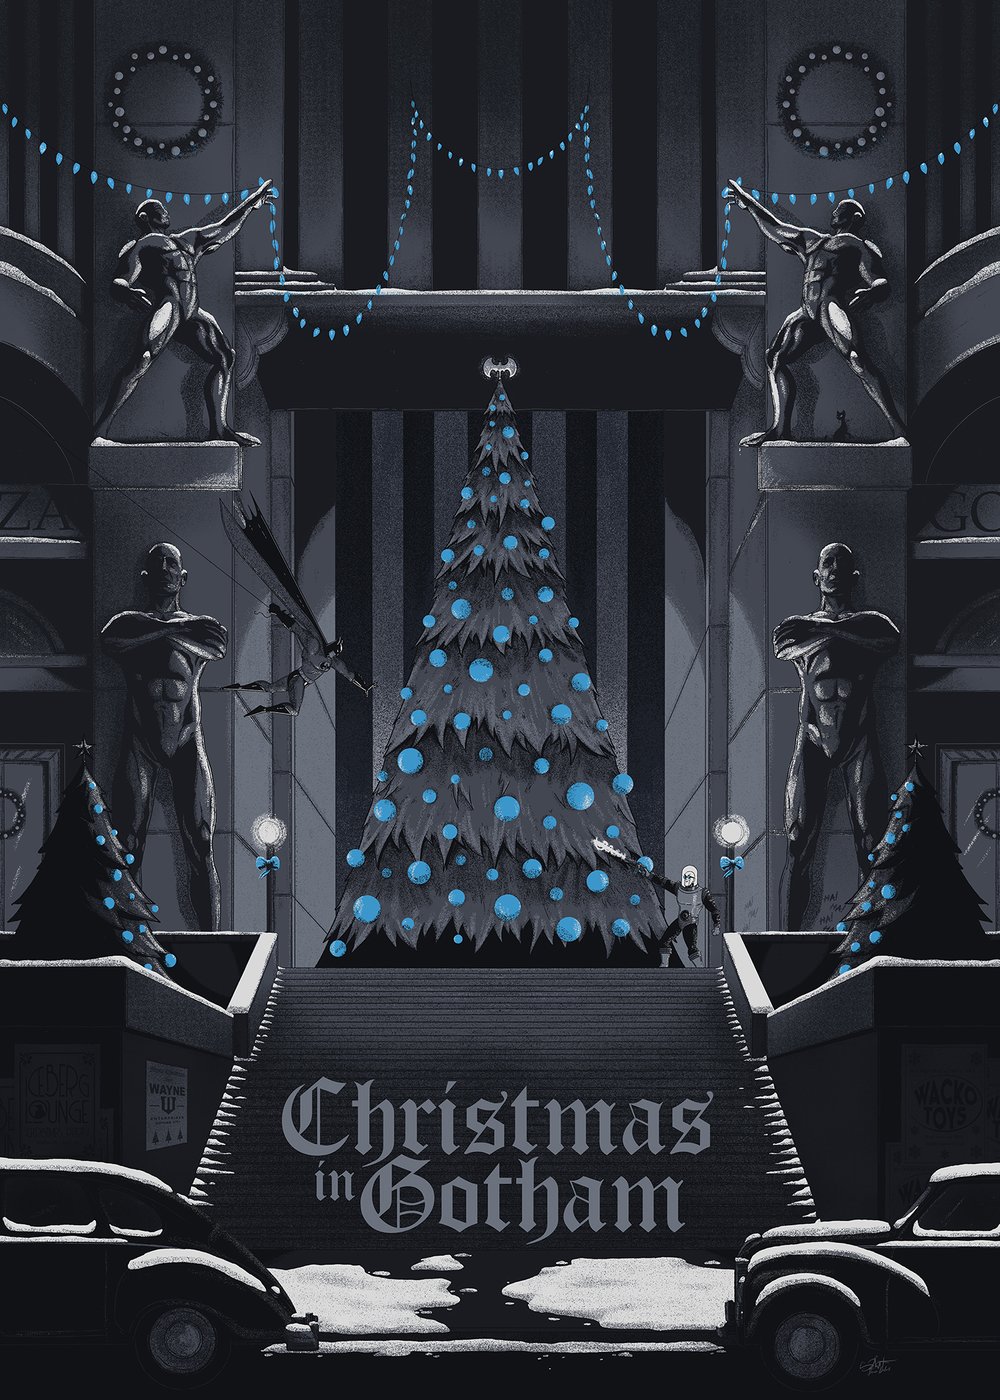 🎄 Christmas in Gotham - 2 versions 🎄